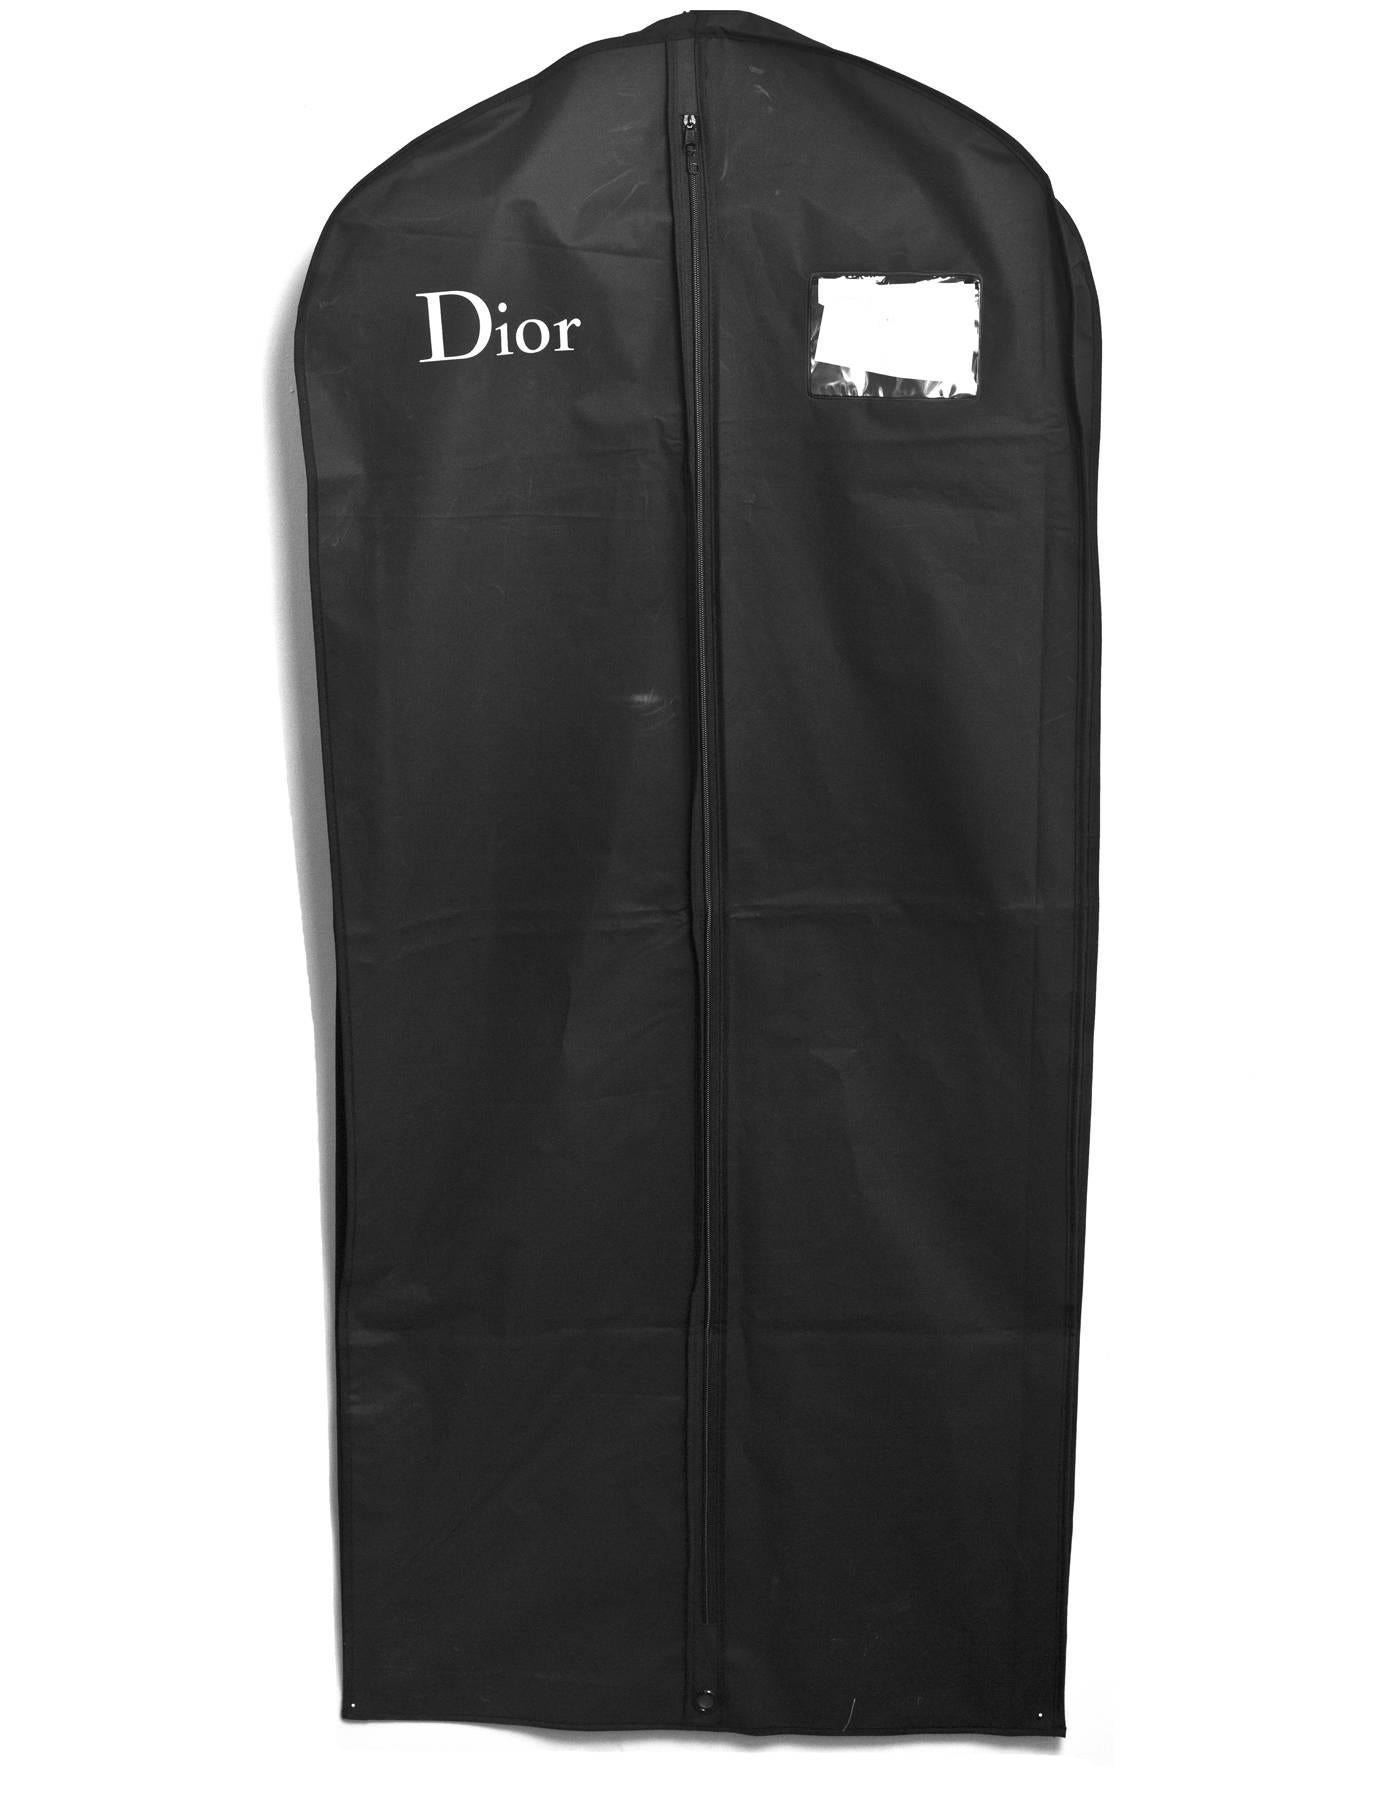 Christian Dior Black & Ivory Printed Silk Sheath Dress Sz 8 3